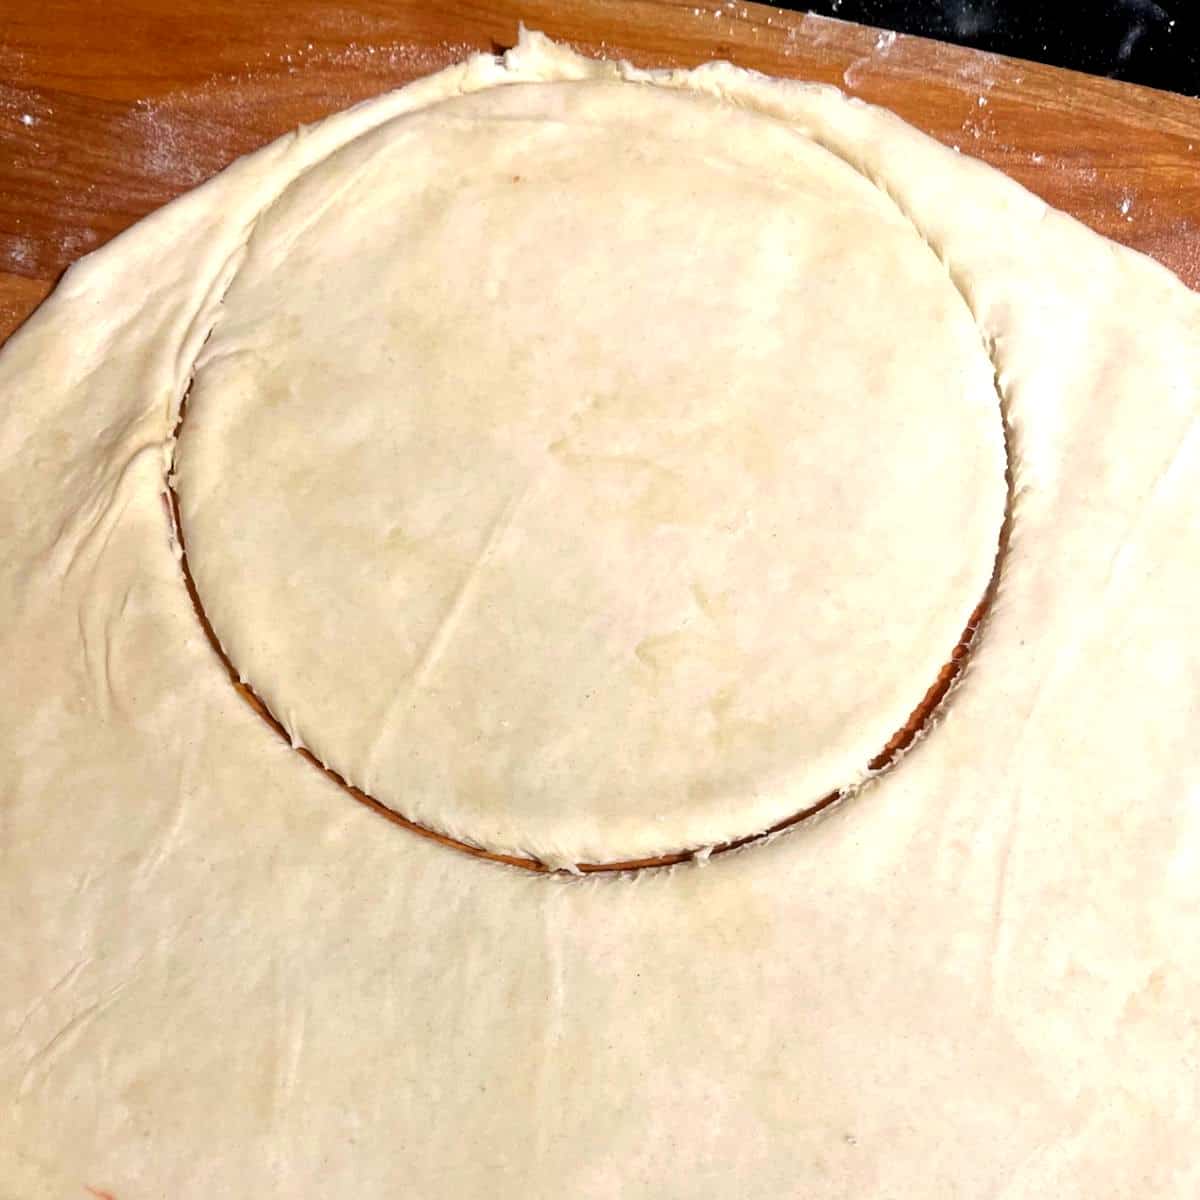 Six-inch disc cut out of empanada dough.